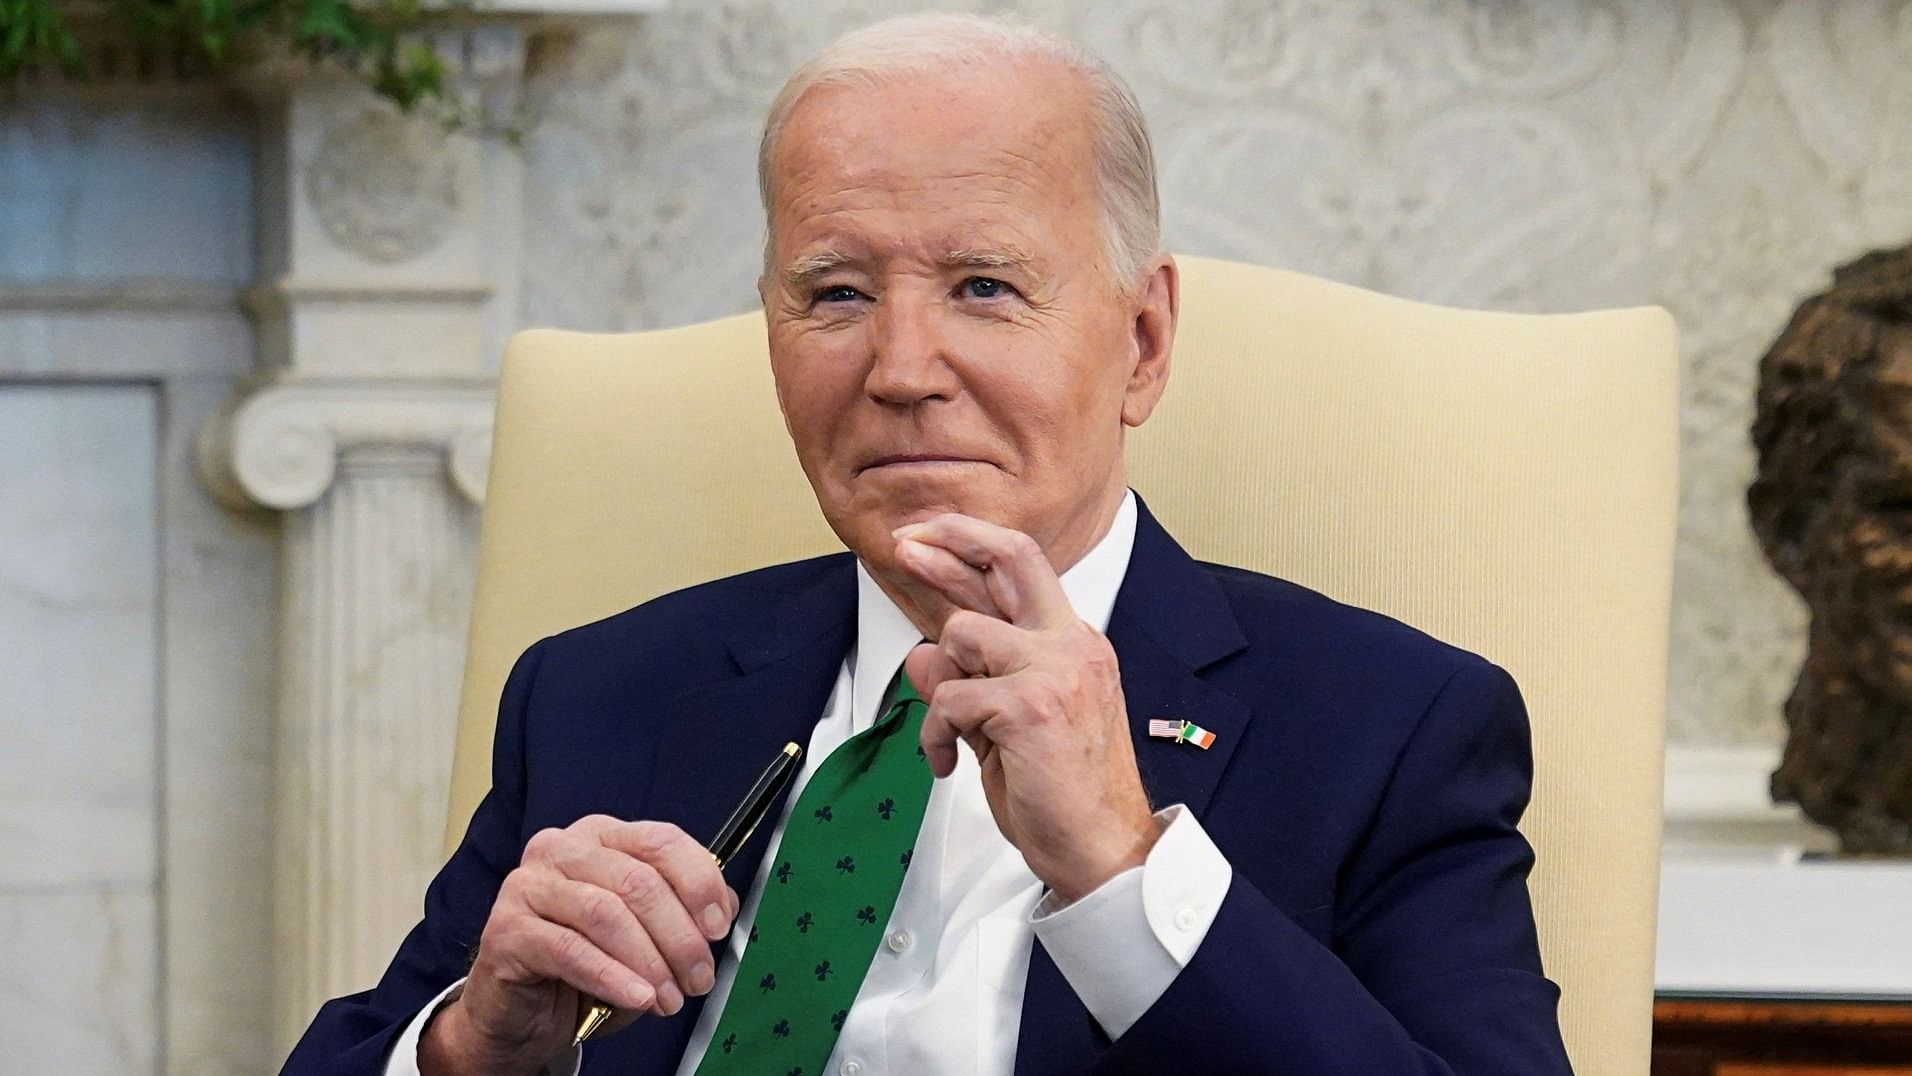 <div class="paragraphs"><p>File photo of US President Joe Biden</p></div>